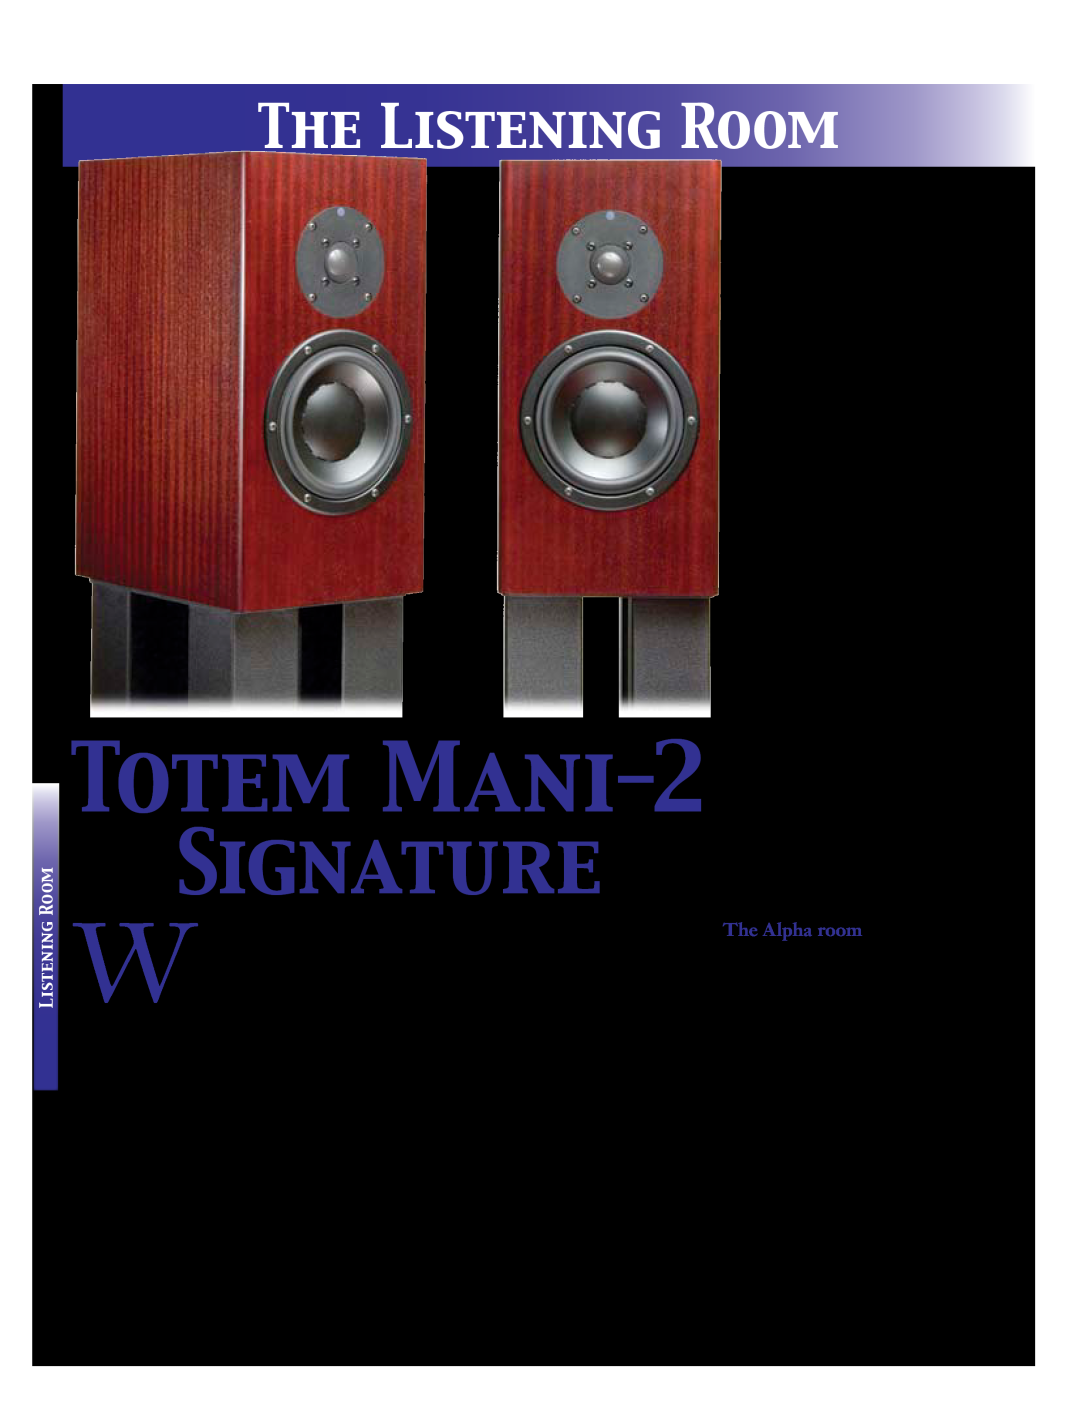 Koss 76 manual The Listening Room, TOTEM MANI-2, Signature, The Alpha room 